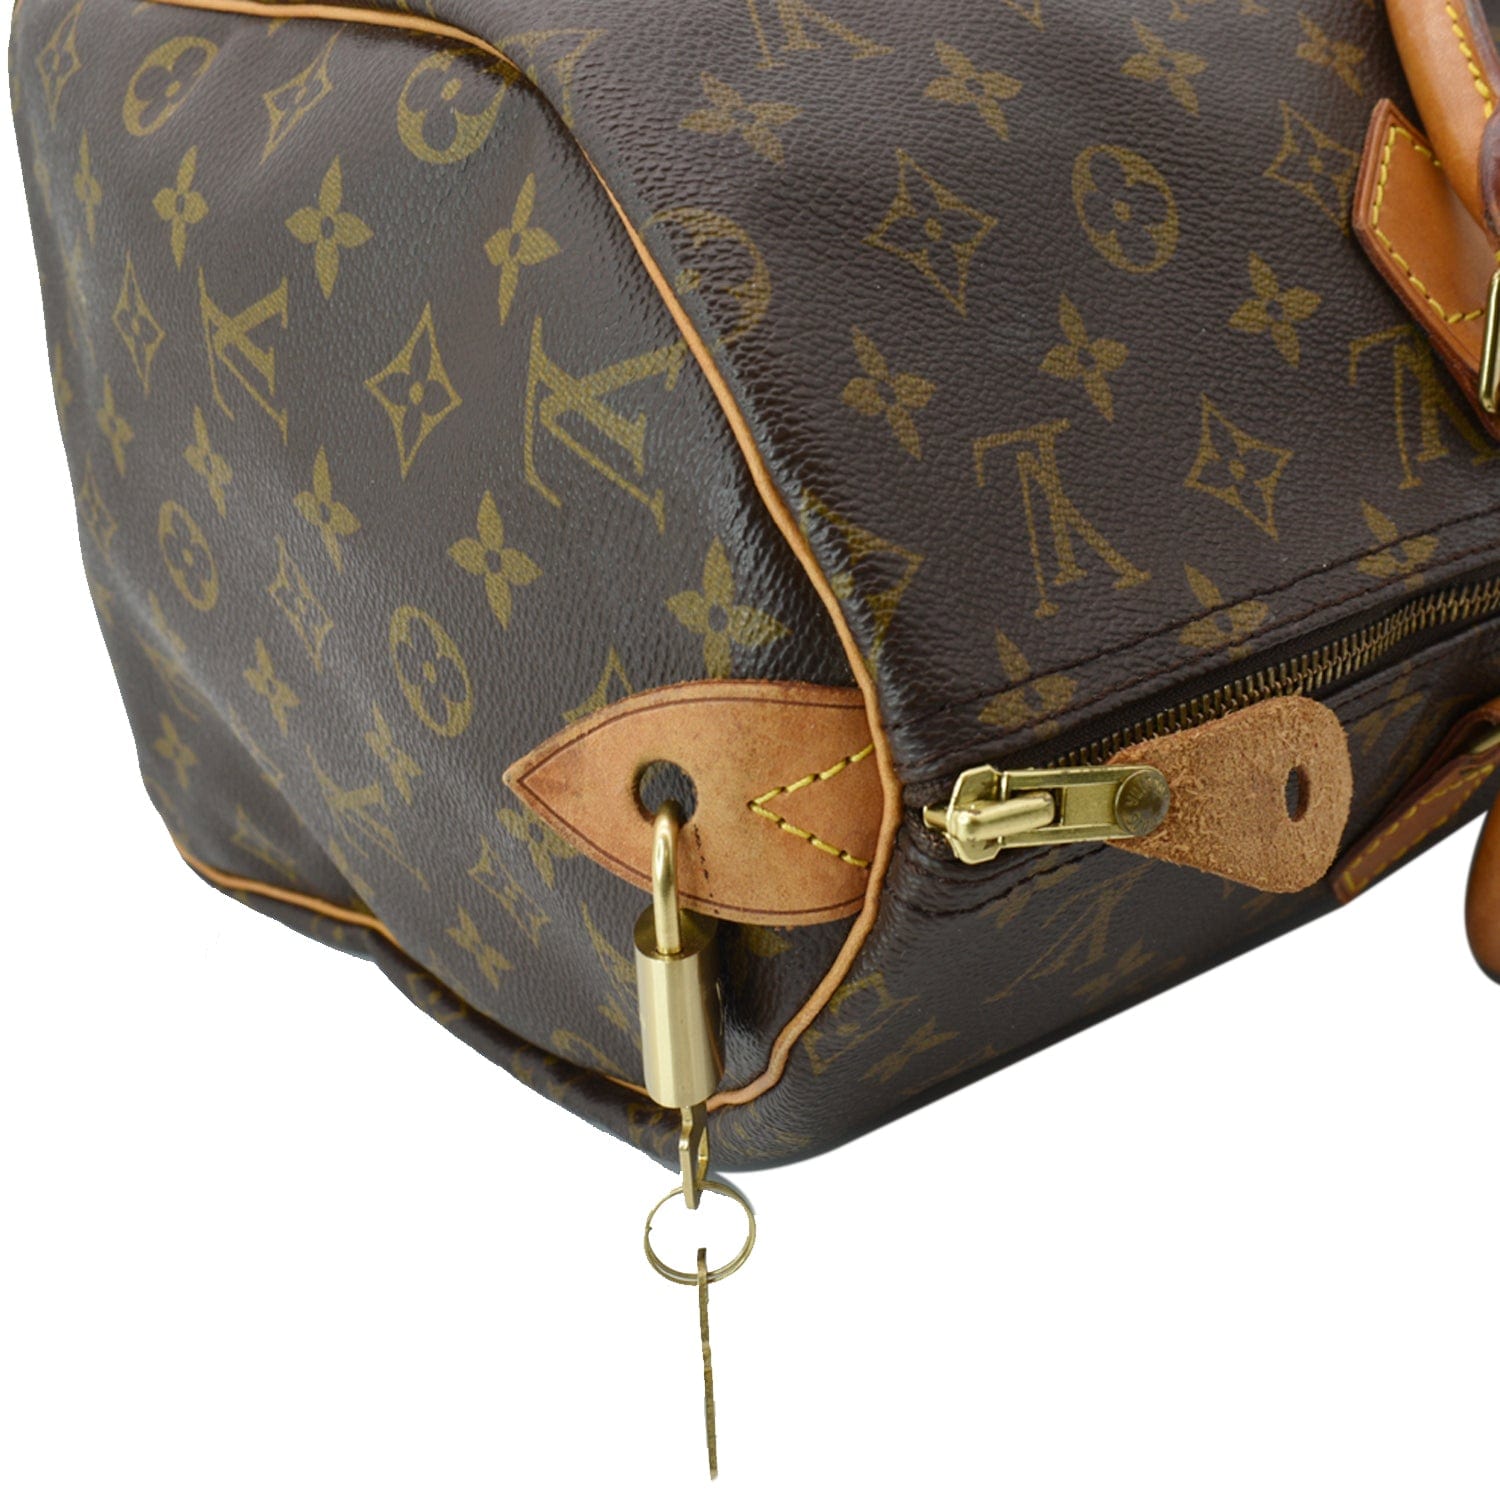 Louis Vuitton Monogram Speedy 40 - Brown Handle Bags, Handbags